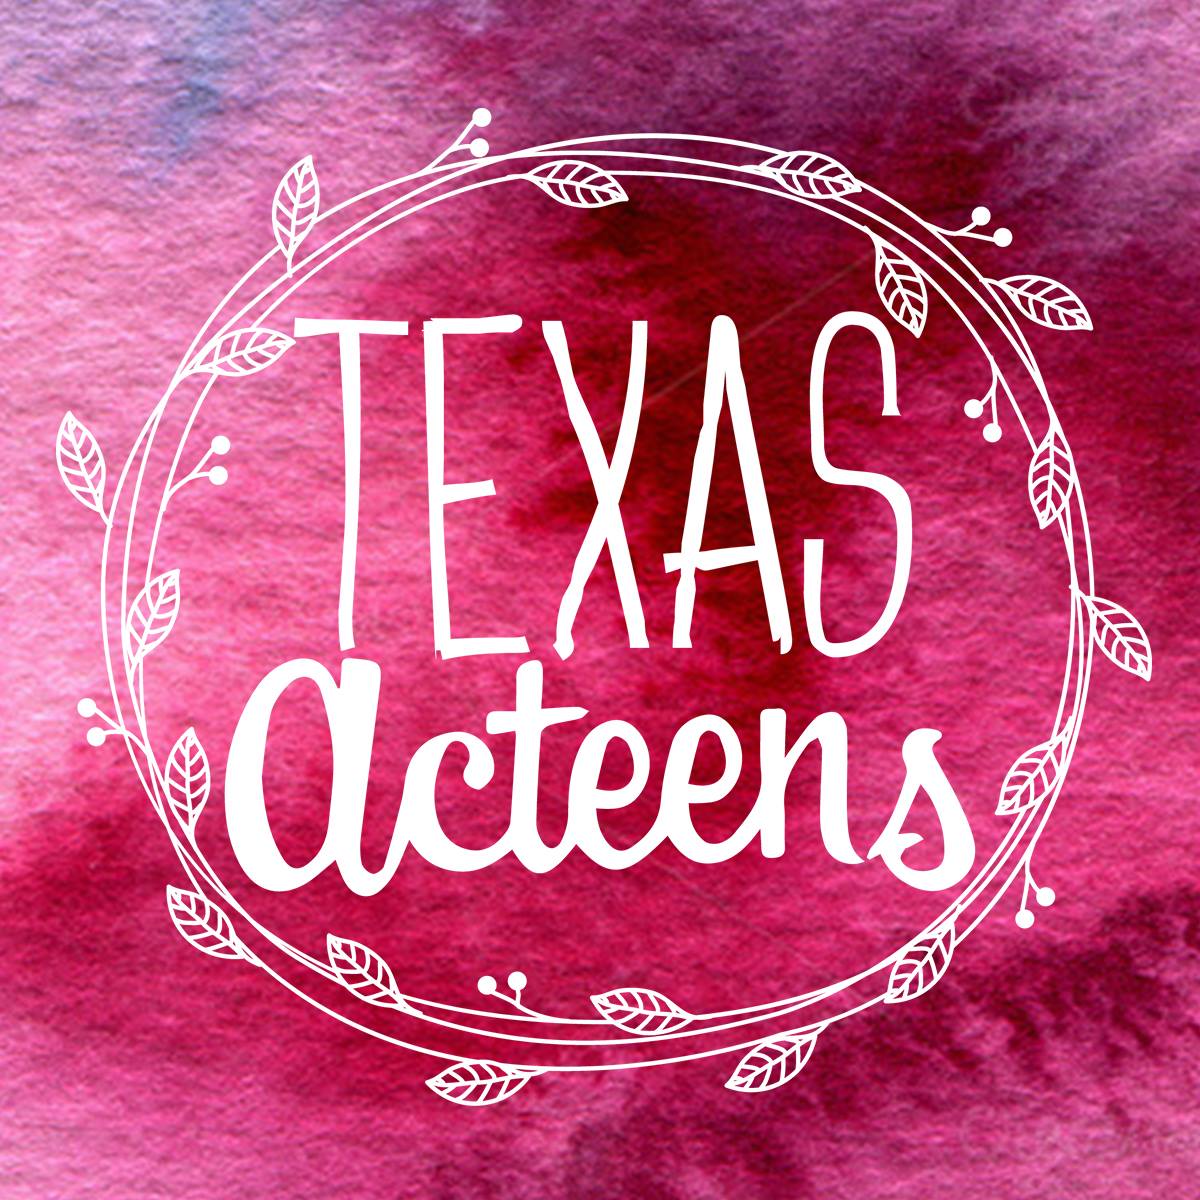 Acteens Logo - WMU of Texas - Acteens Leaders